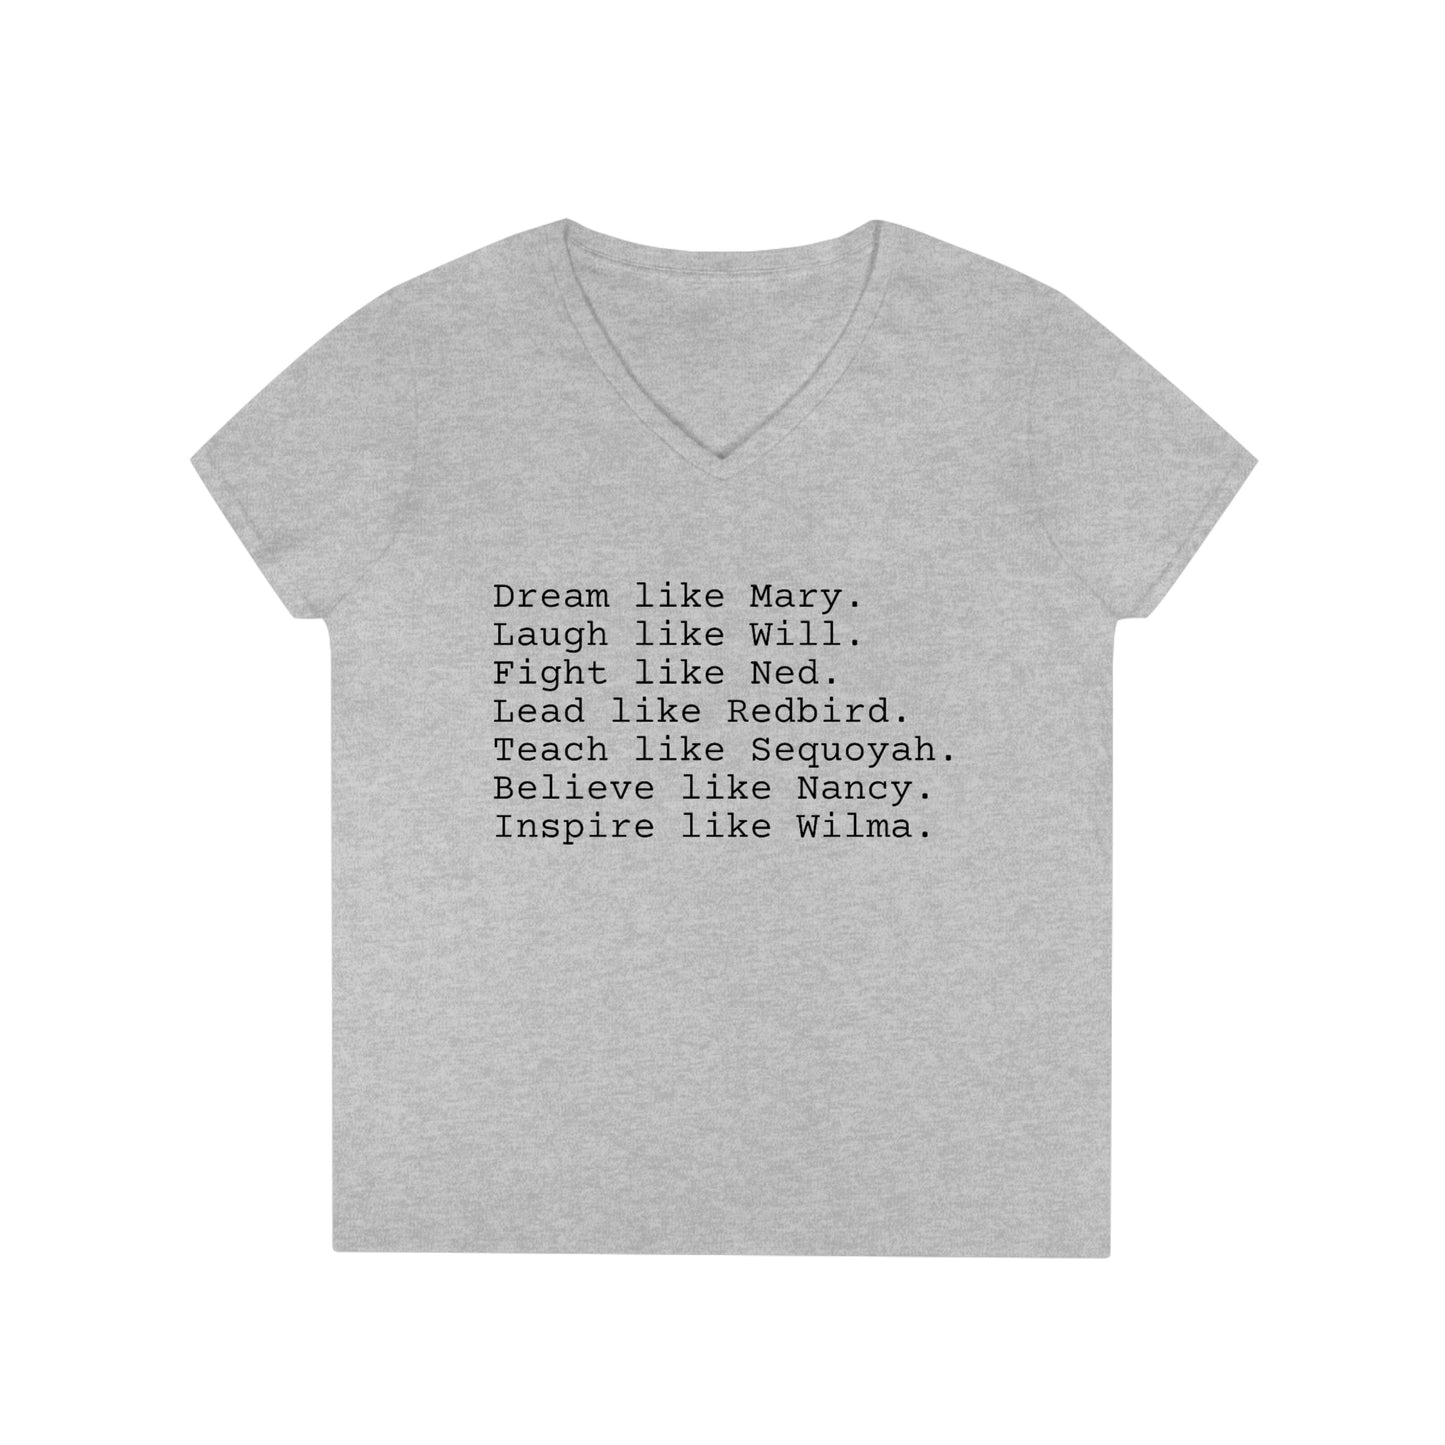 Ladies' V-Neck T-Shirt